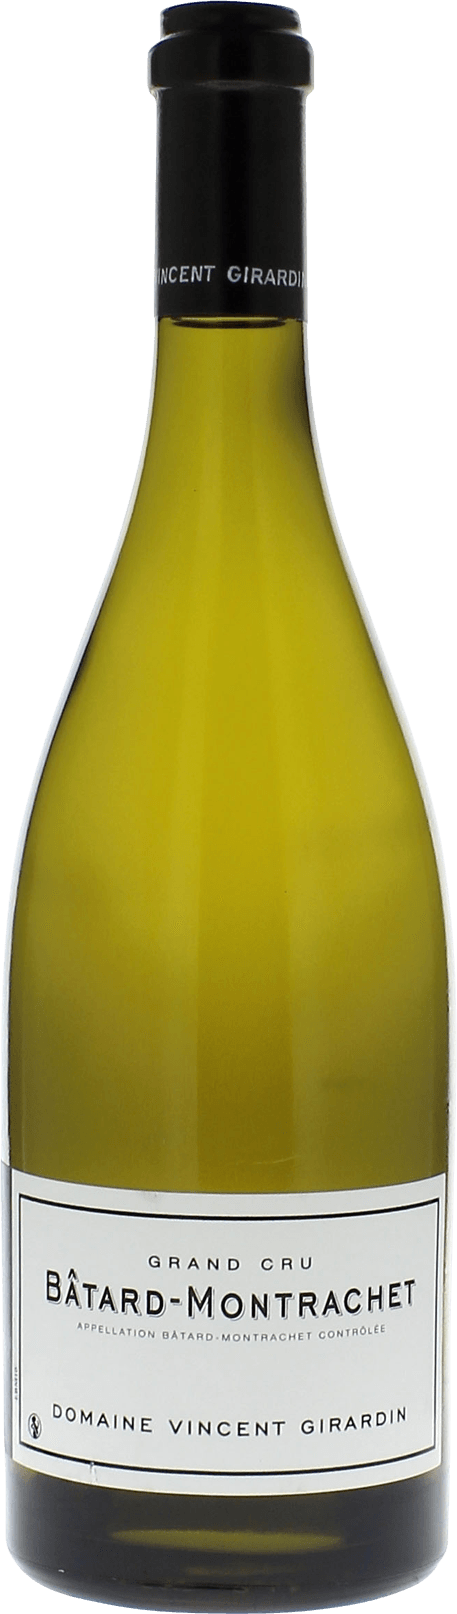 Batard montrachet grand cru 2017 Domaine GIRARDIN Vincent, Bourgogne blanc